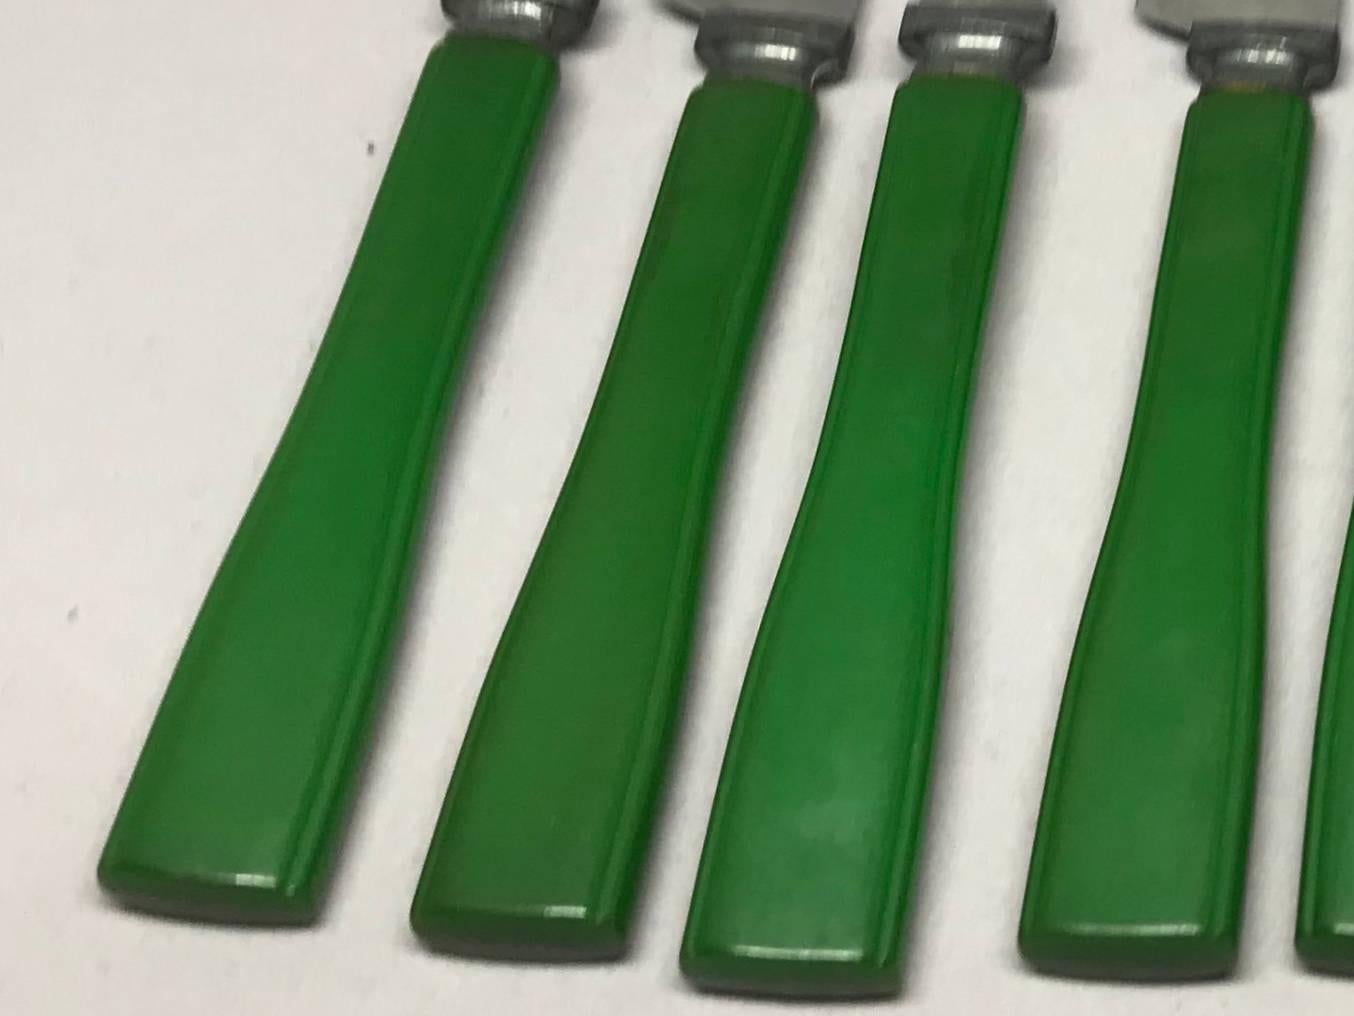 Set of five green Bakelite forks and knives. Vintage set of stainless steel forks and knives with green Bakelite handles, American, circa 1940s. 
Dimensions: fork 7.5